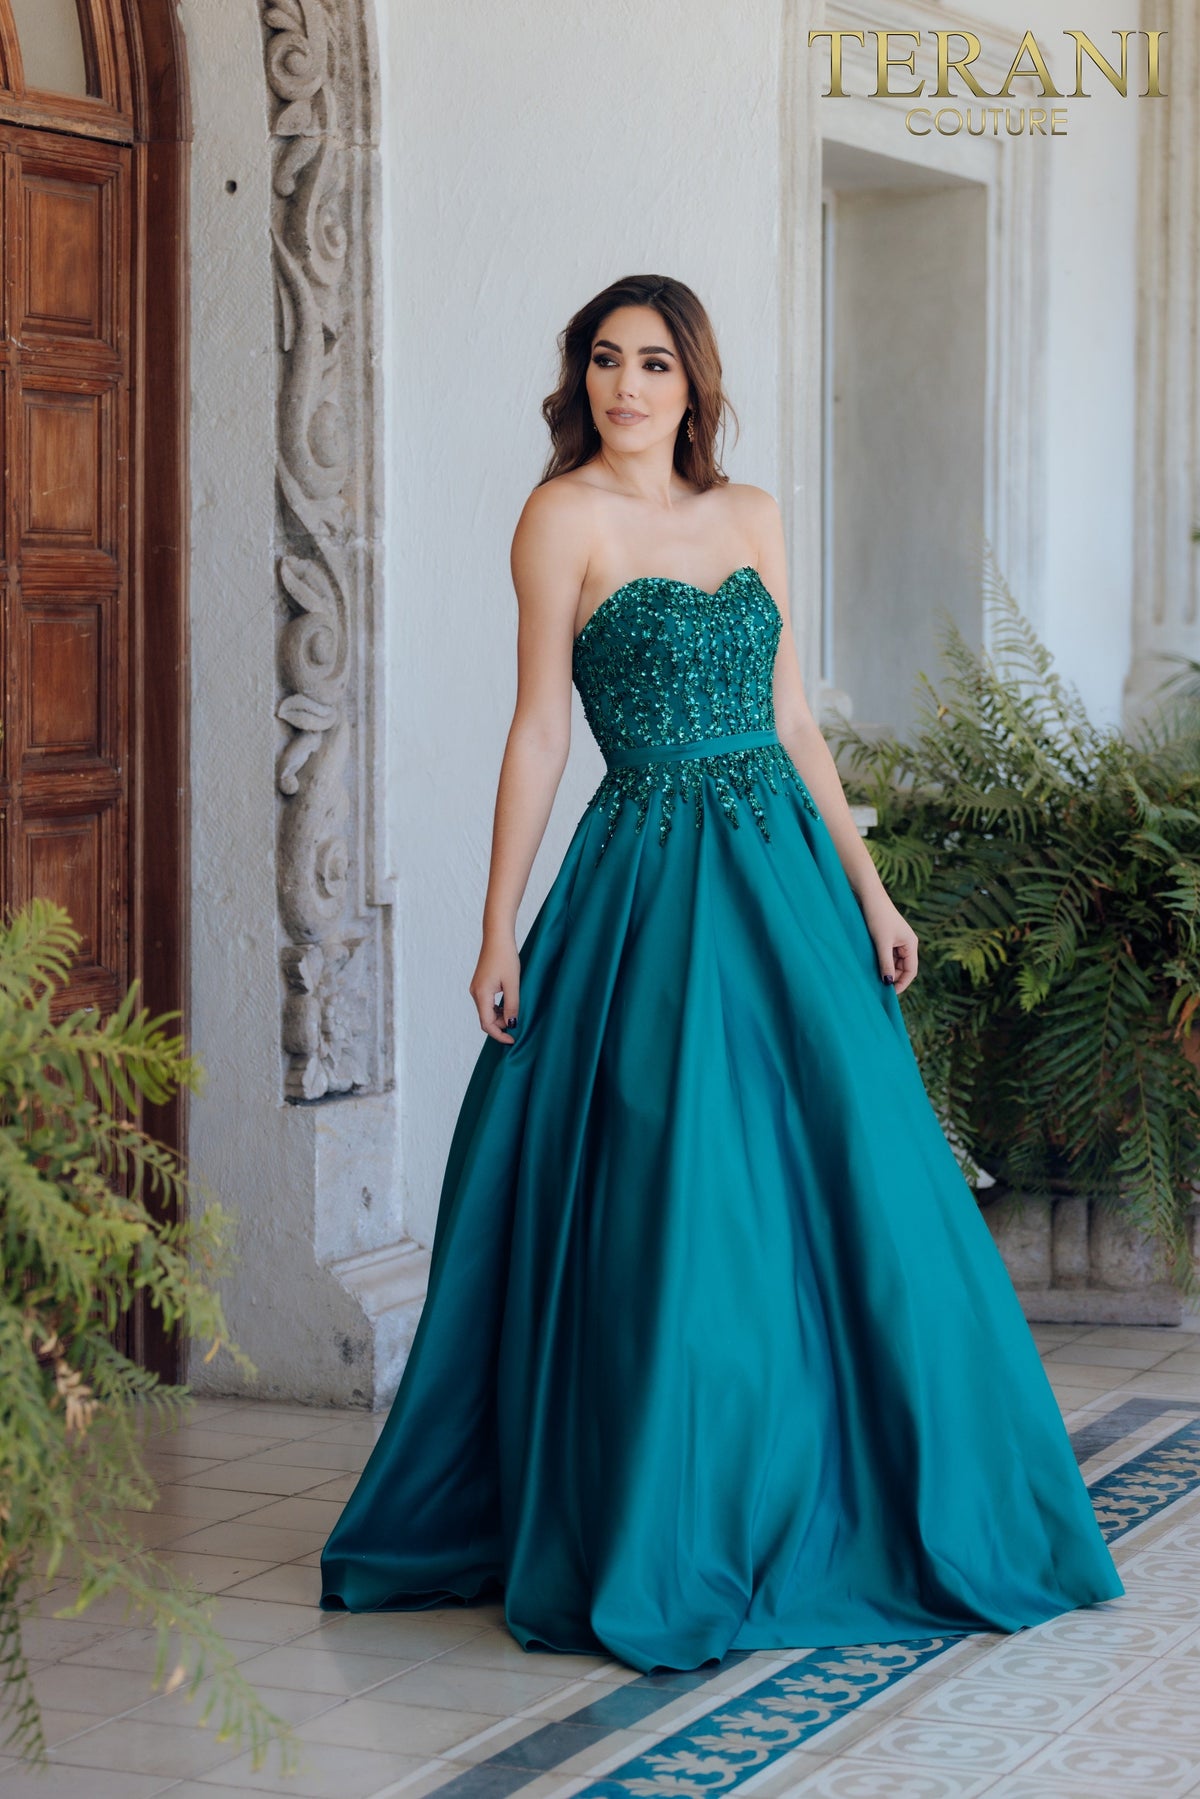 Terani Couture 231P0012 Dress